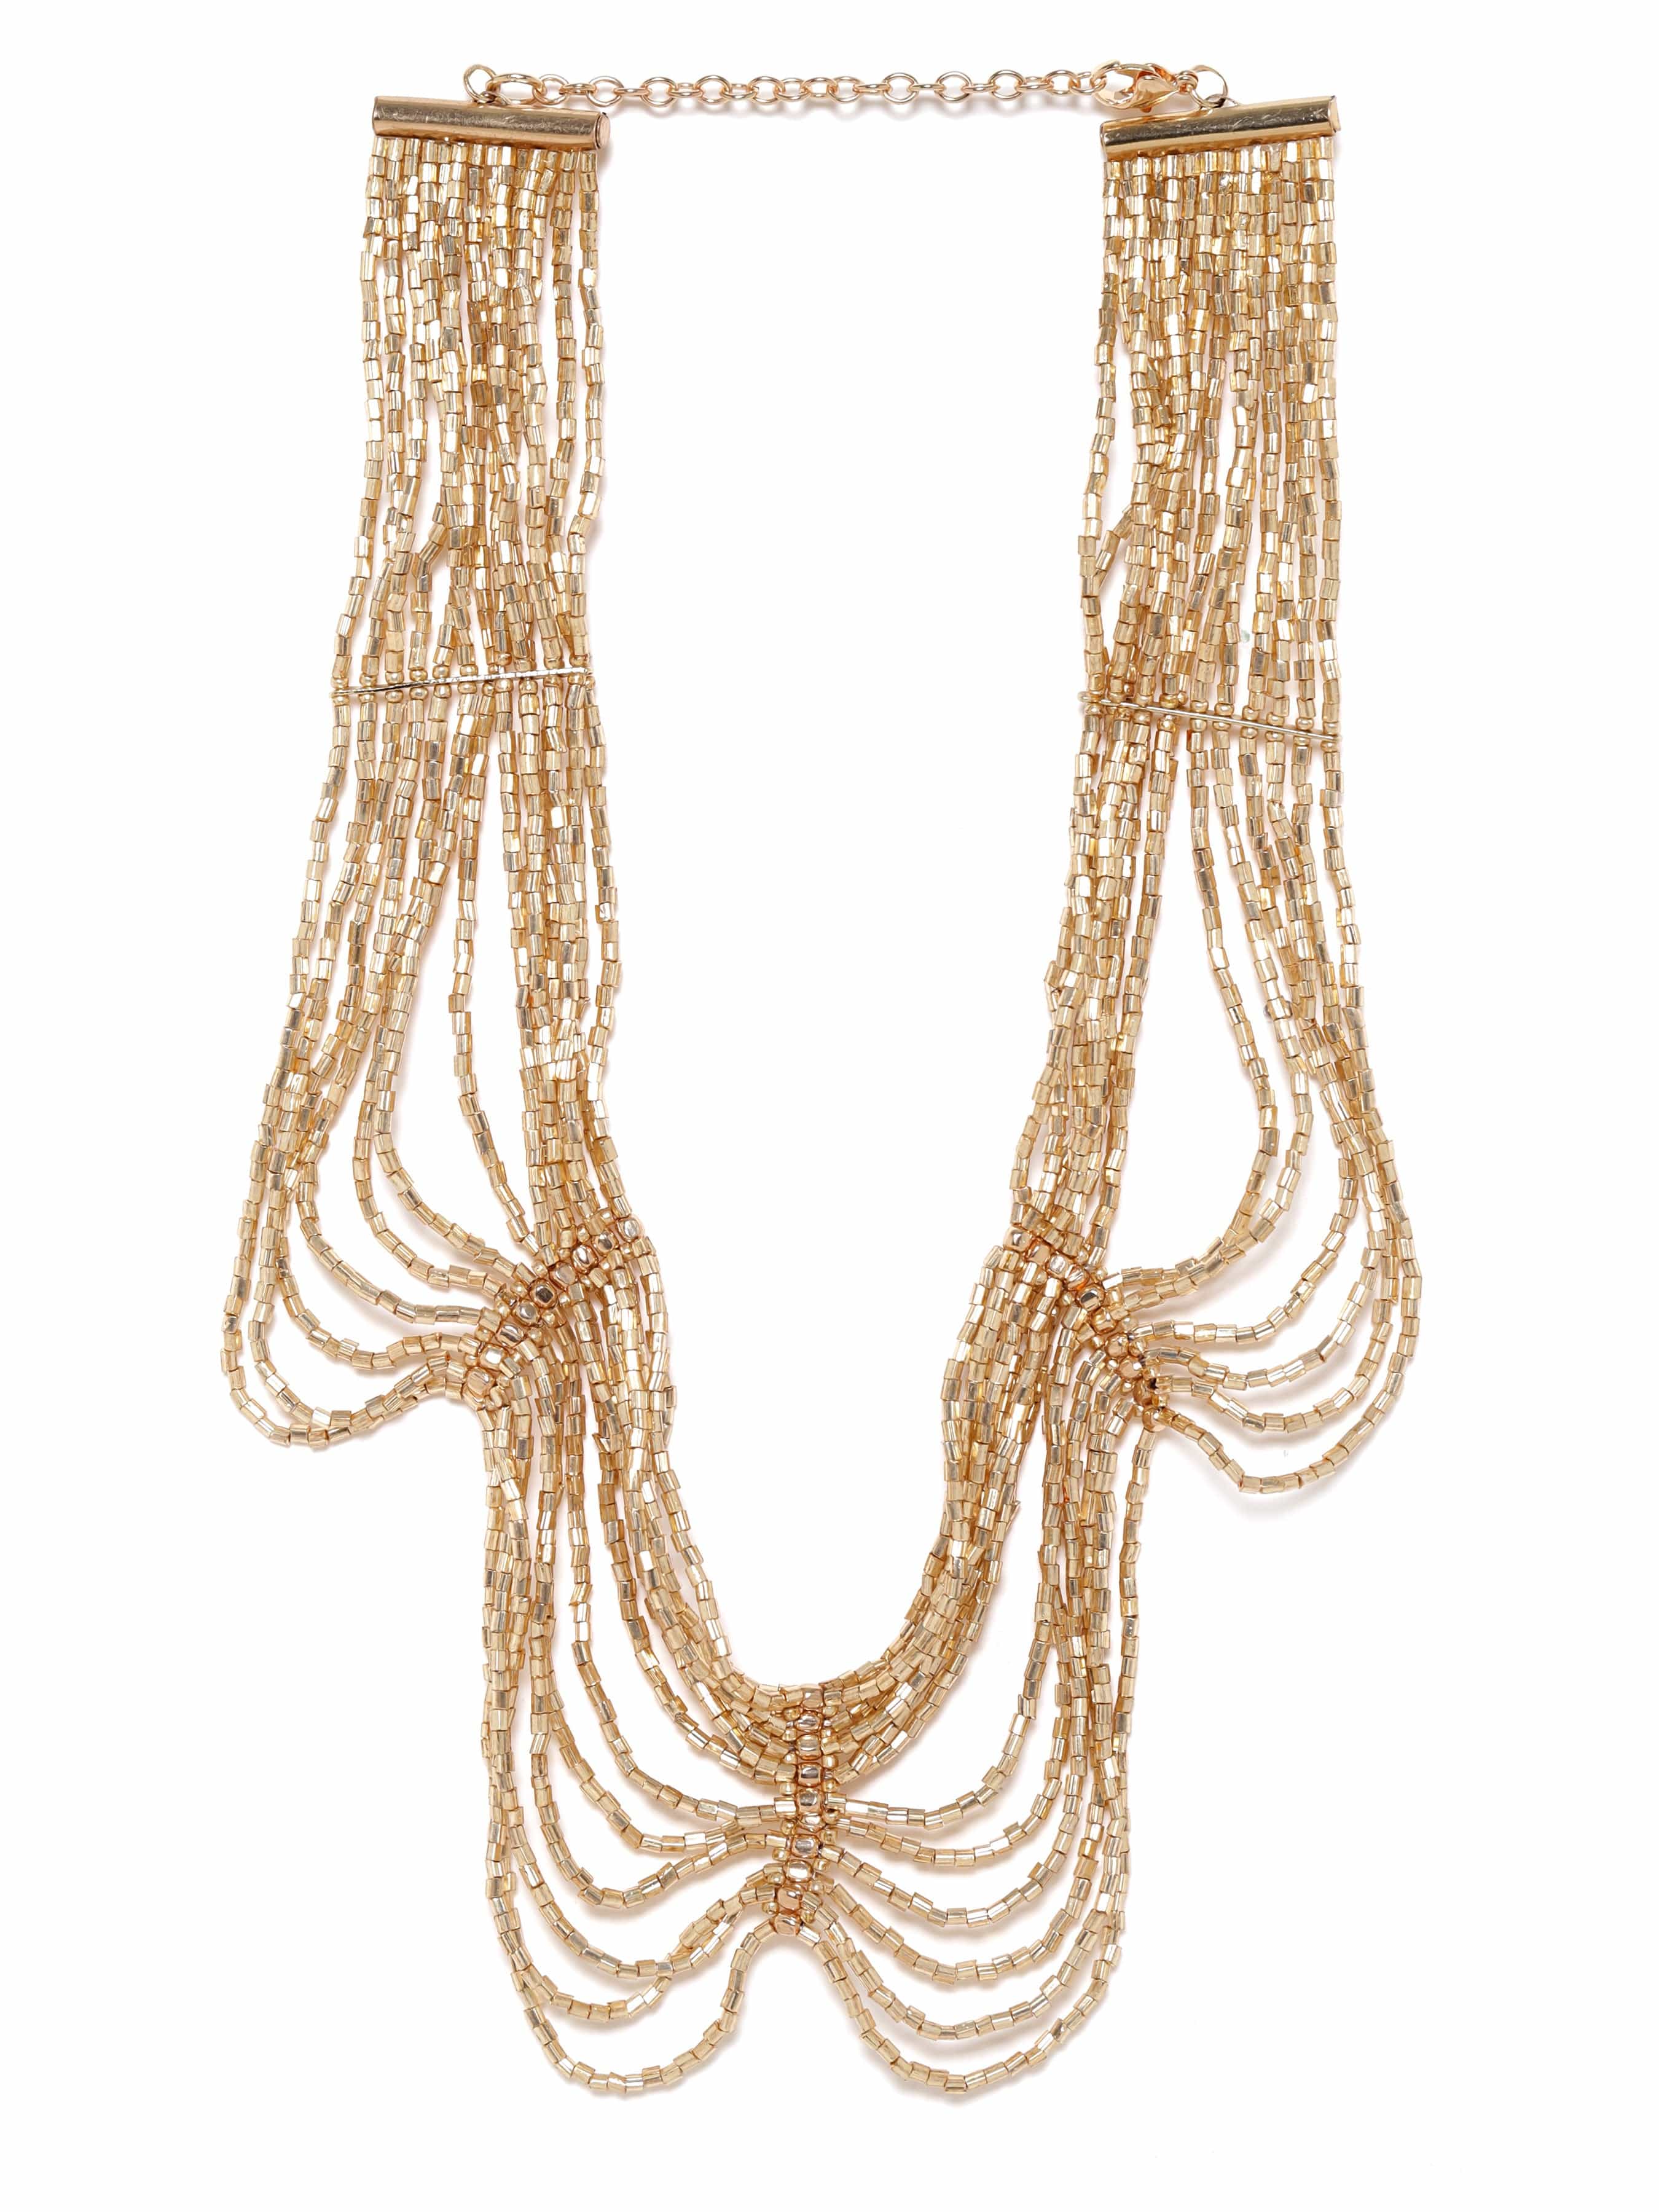 gold stone Necklace Multi Layer Chain Triple Charm Drop Pendant Choker Boho  uk | eBay